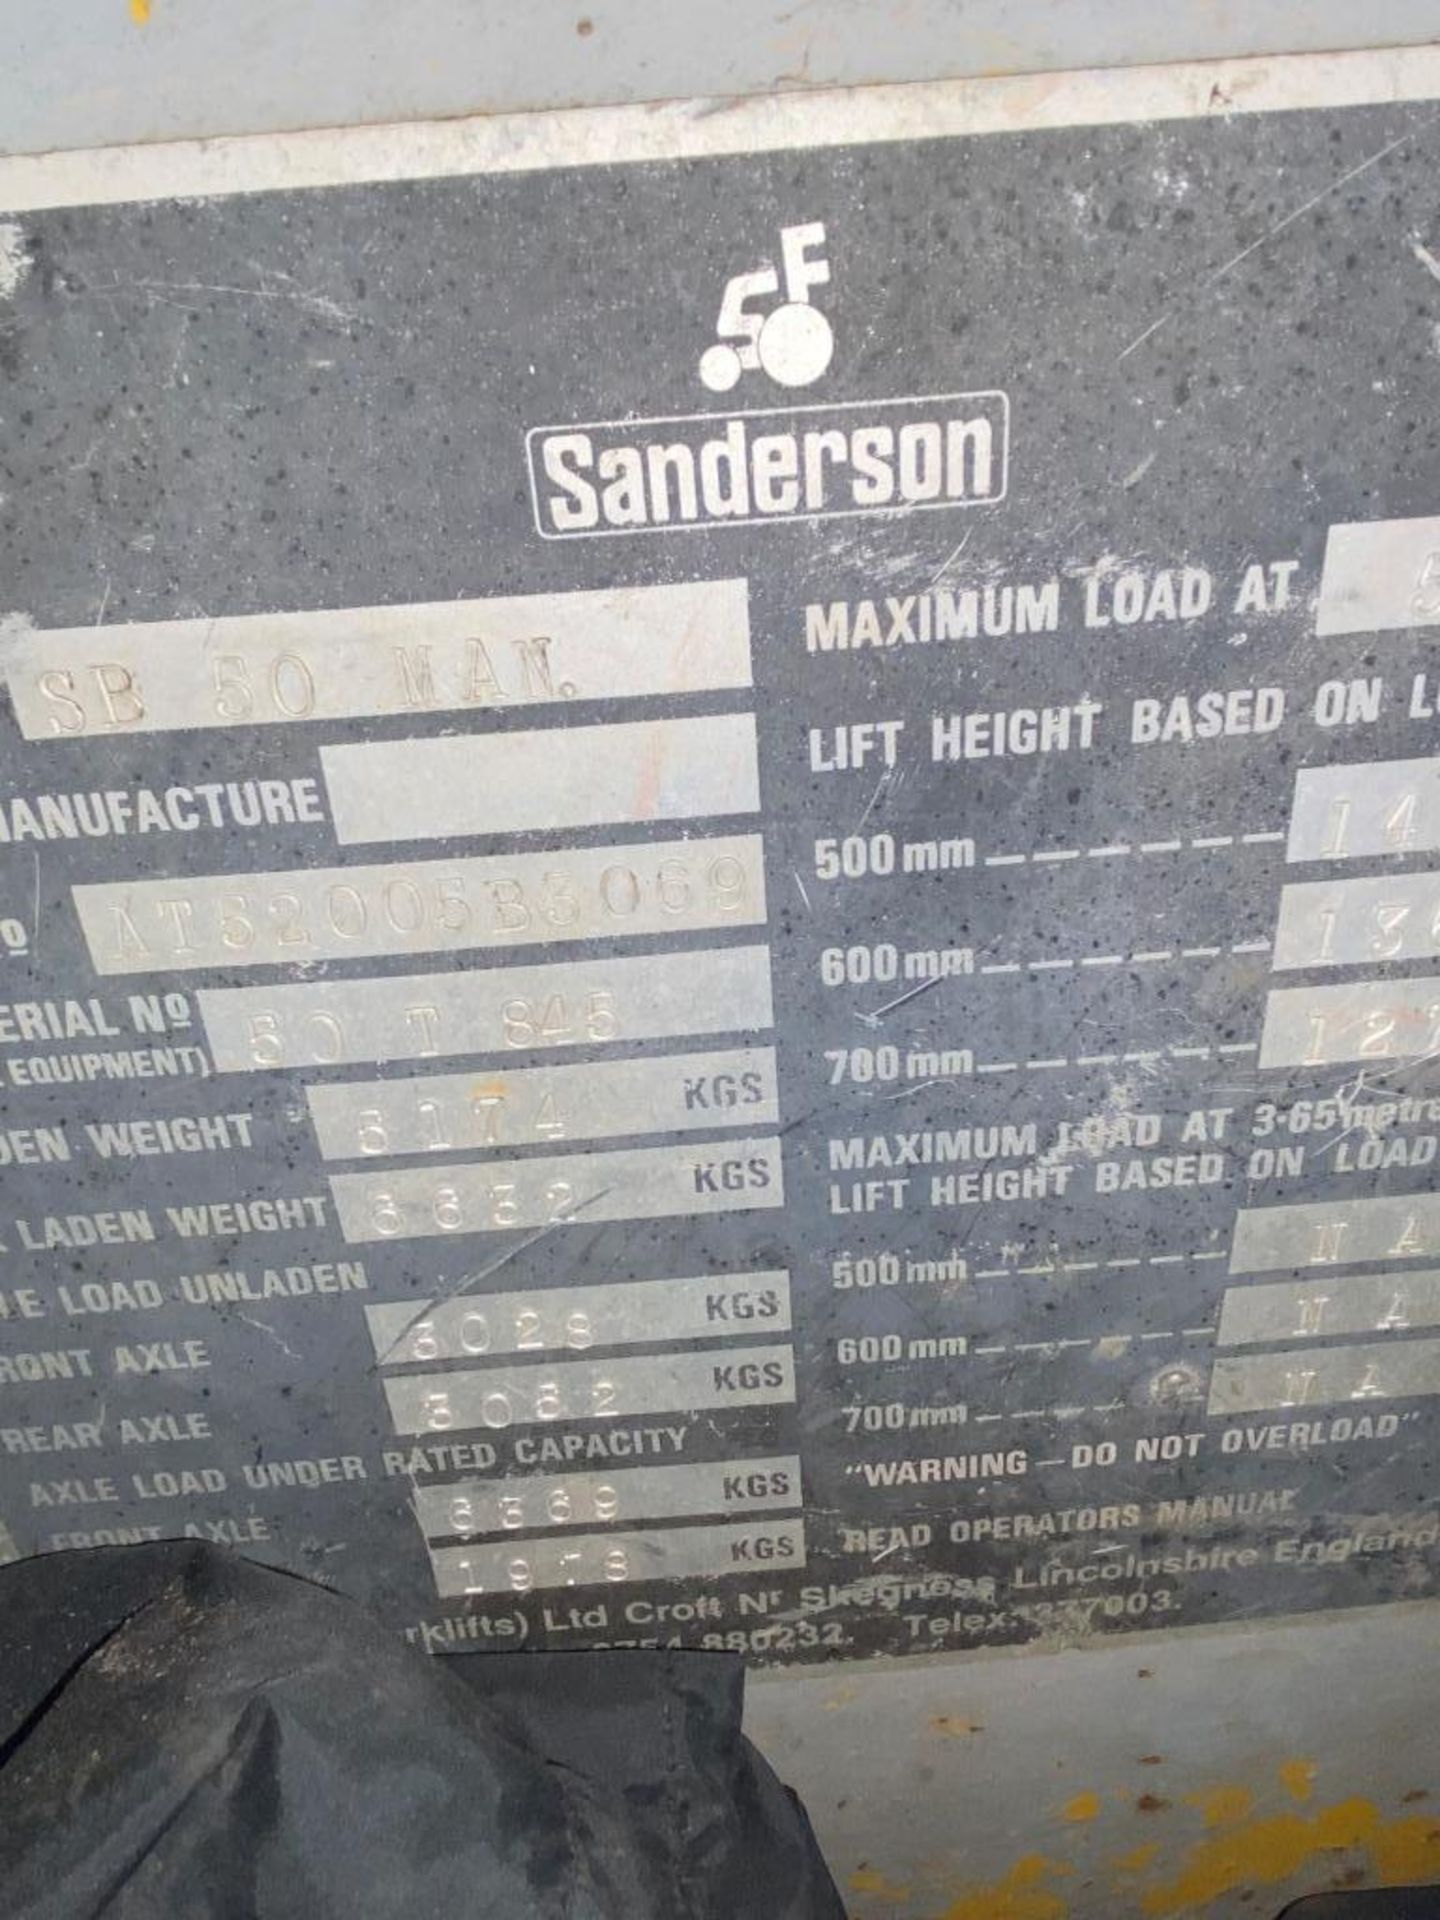 Sanderson SB50 MAN rough terrain fork truck - Image 22 of 22